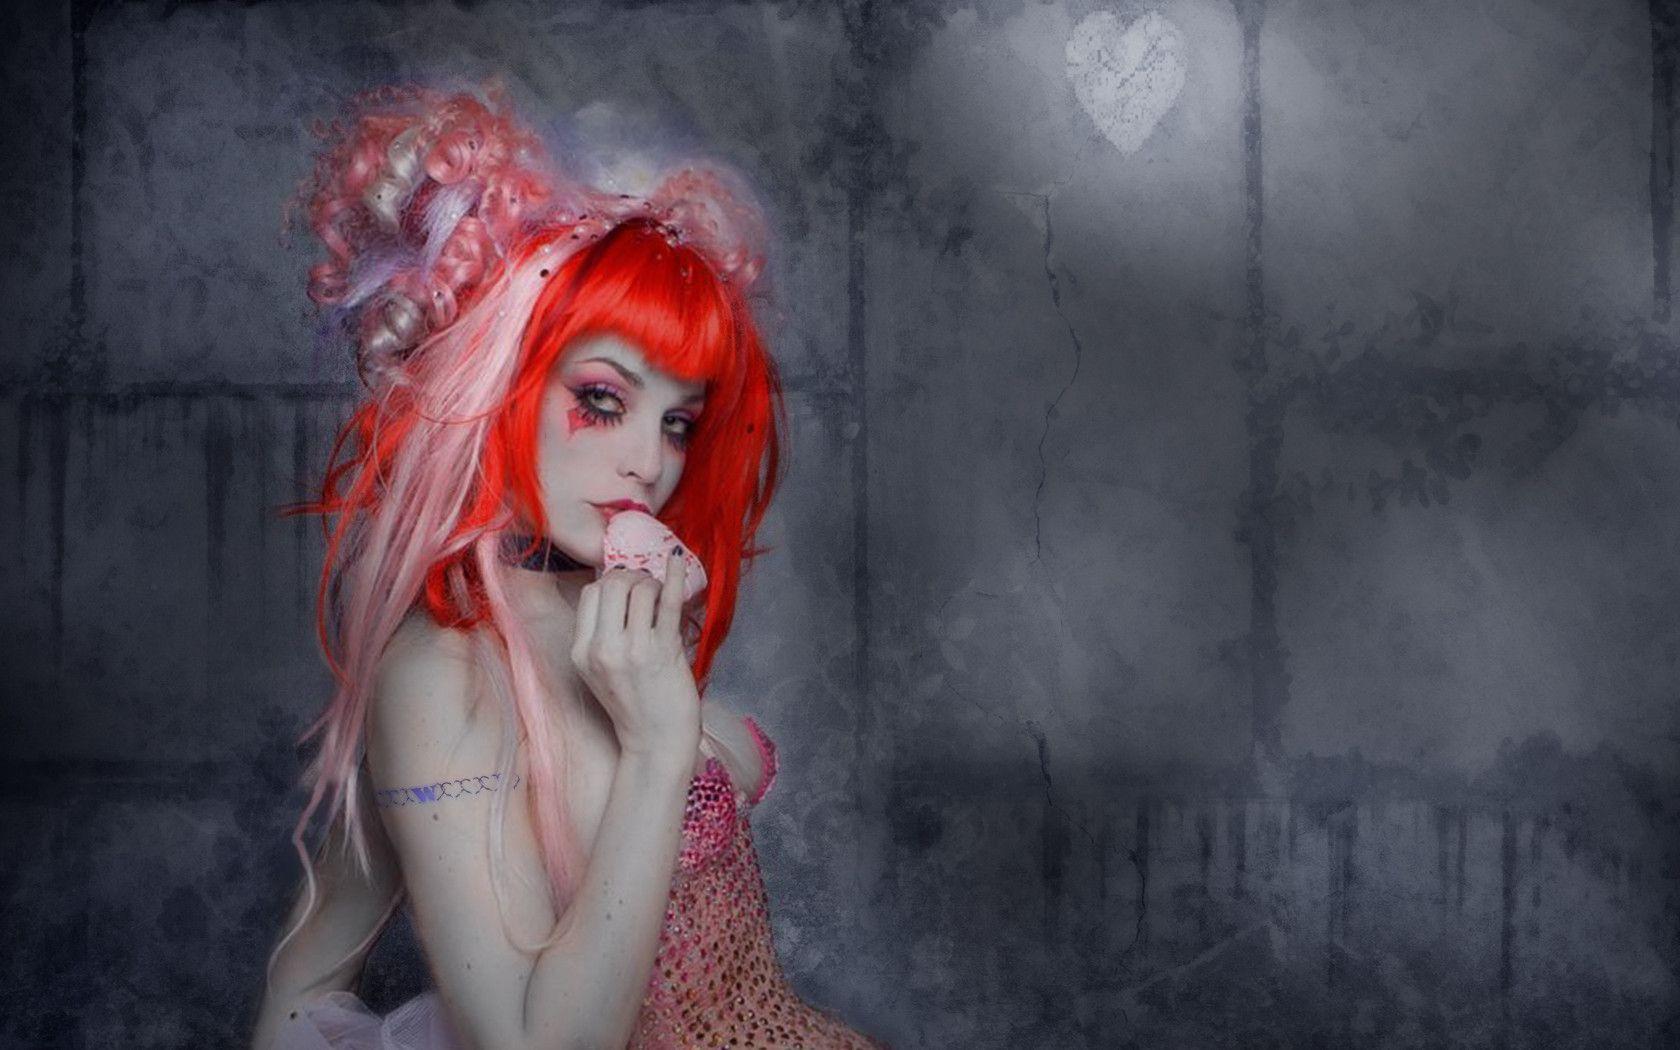 Emilie Autumn Wallpaper 41154 HD Wallpaper. pictwalls